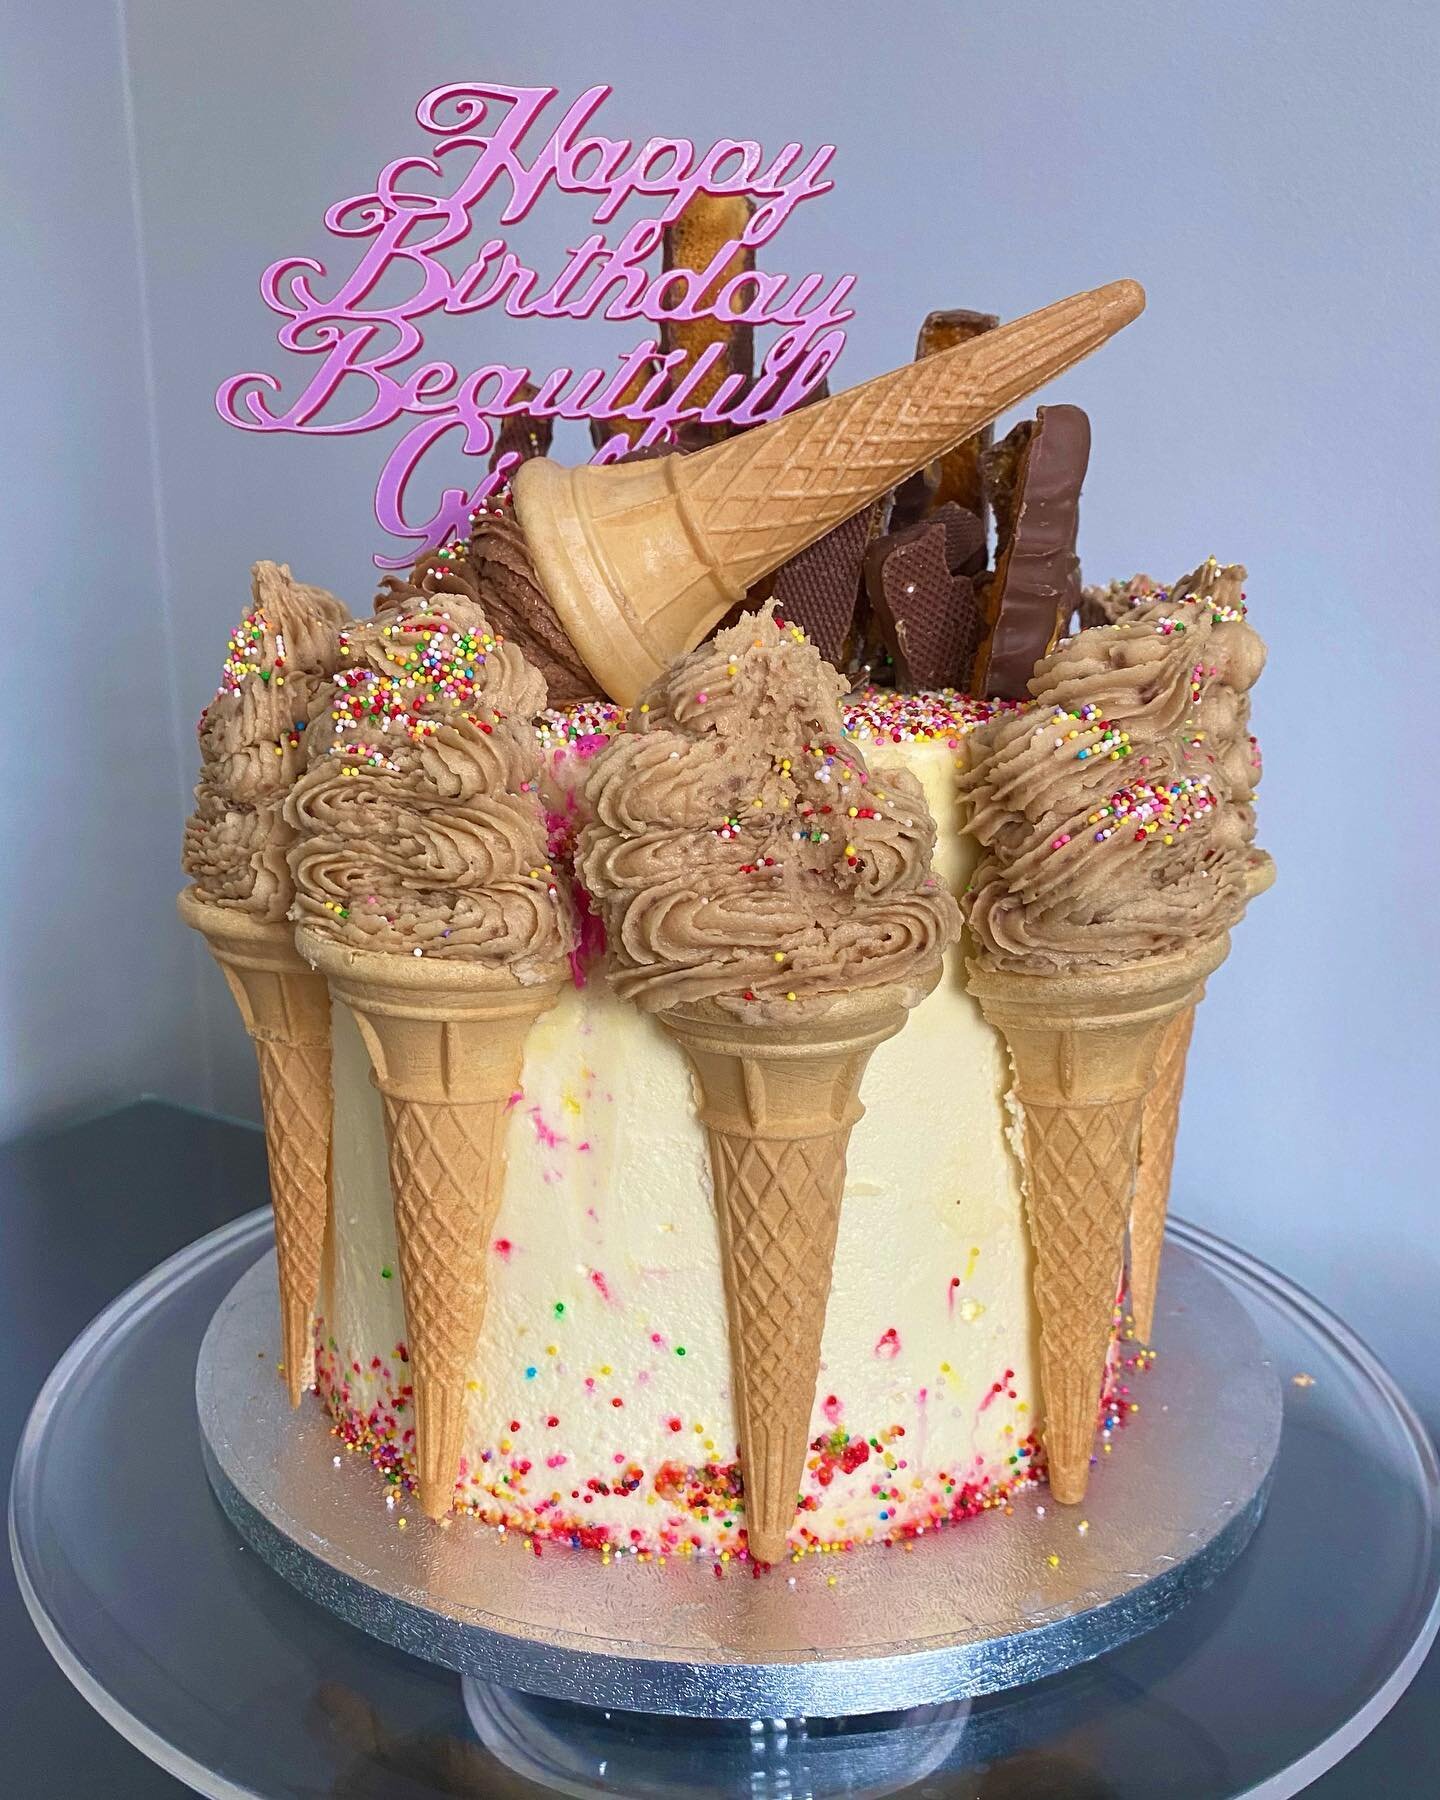 Ice Cream, you scream, we all scream for Ice Cream &hellip;.. Cone Cakes 🍦 🎂  #hampsteadbakery #birthday #celebration #icecreamcakes #sprinklecakes #wowcakes #buttercreamcakes #instagood #londonfood #instafood #celebrationcakes #foodpost #foodmemes